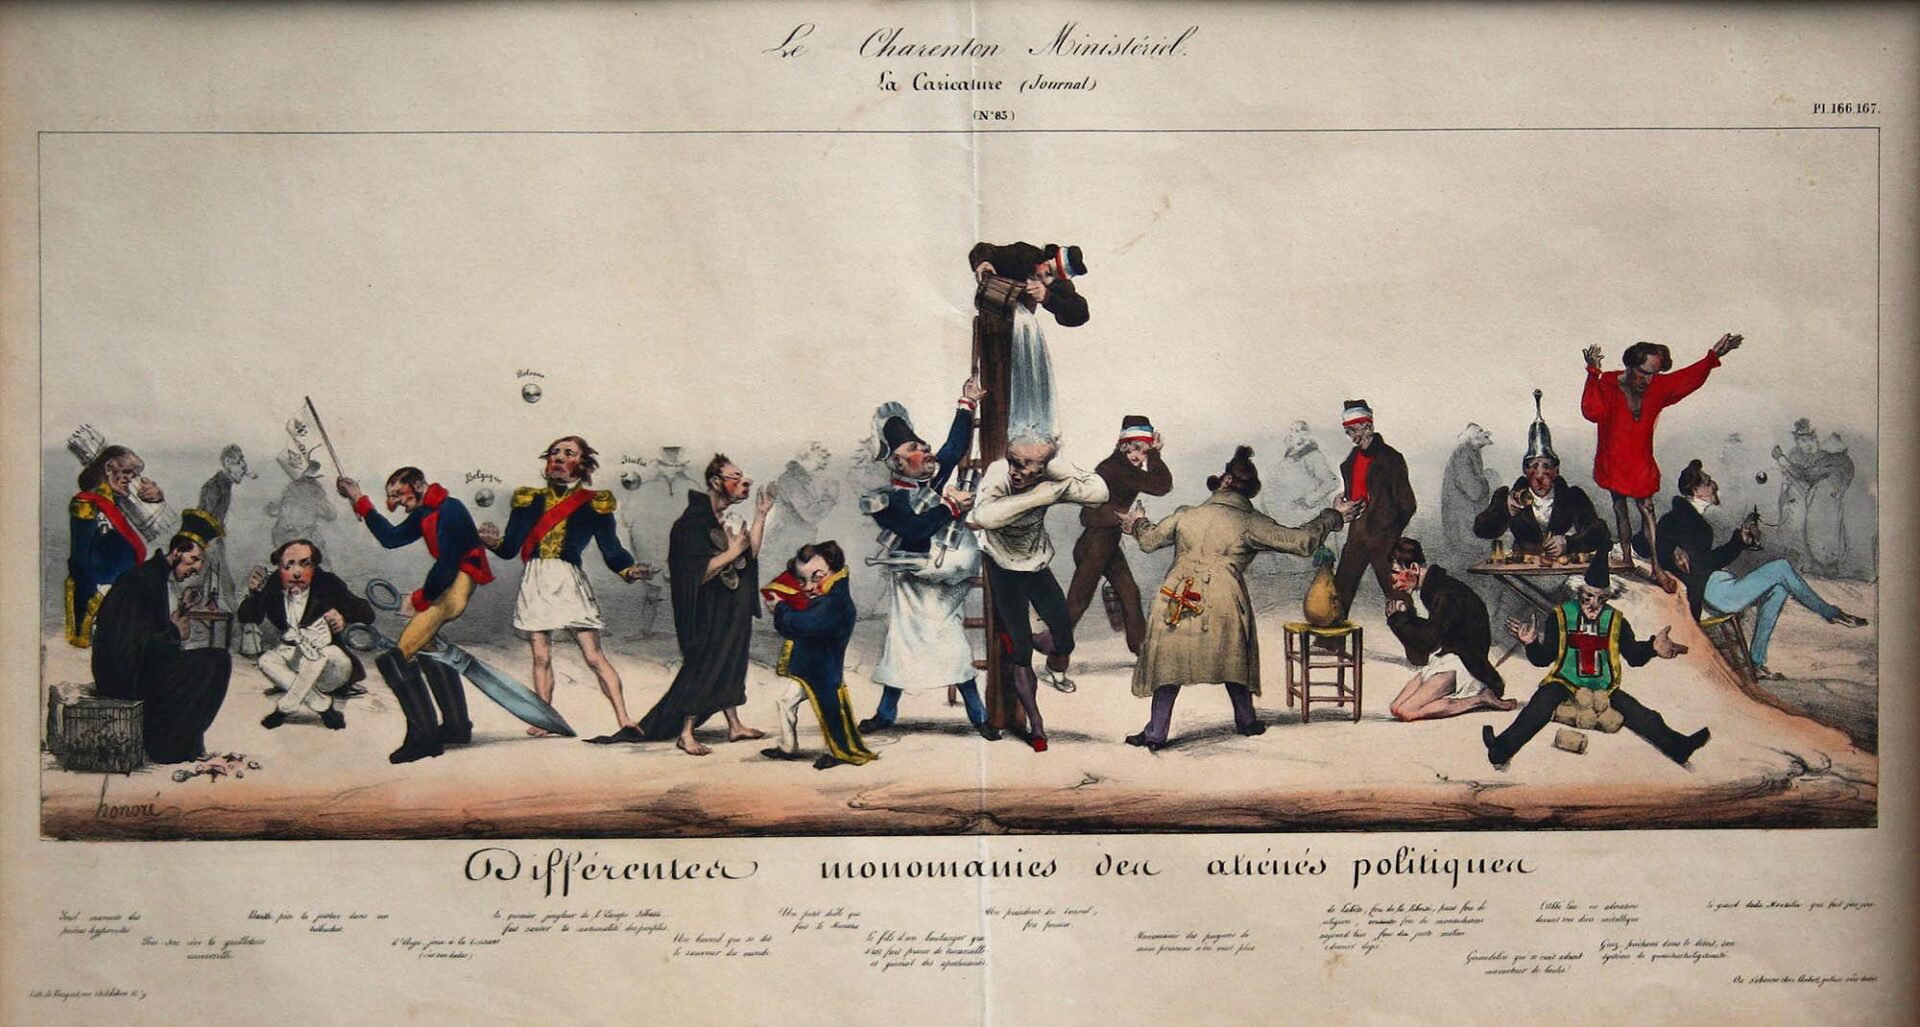 “Different monomanias of insane politicians” - Daumier Honore